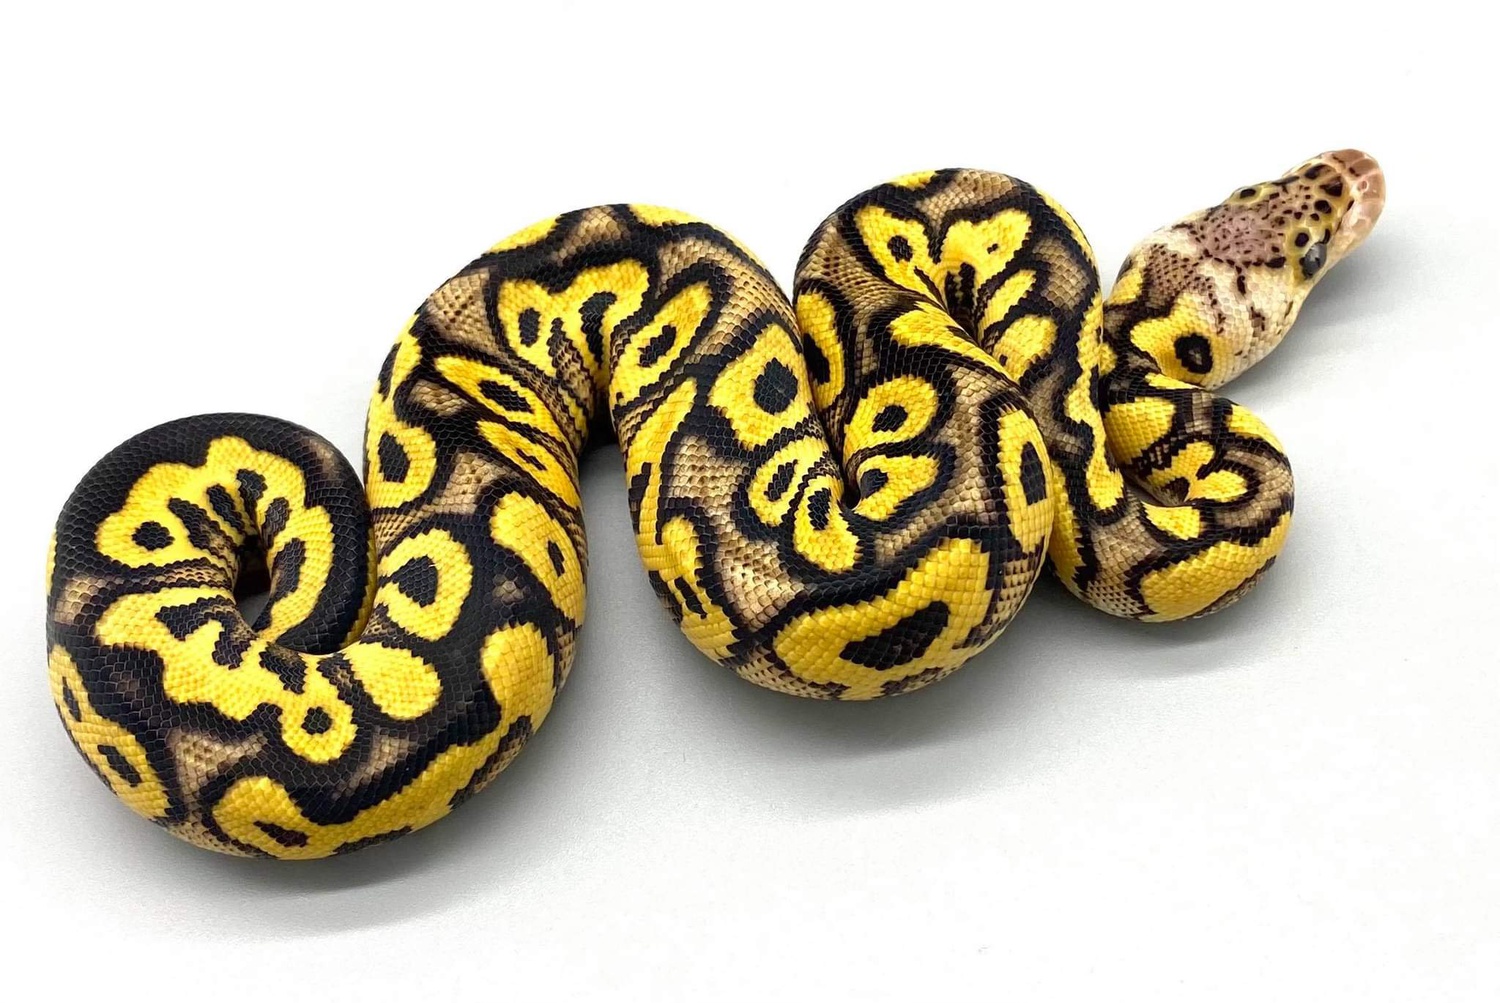 Pastel Honey YB Poss Vanilla Clown Ball Python by Herps Etc Reptiles